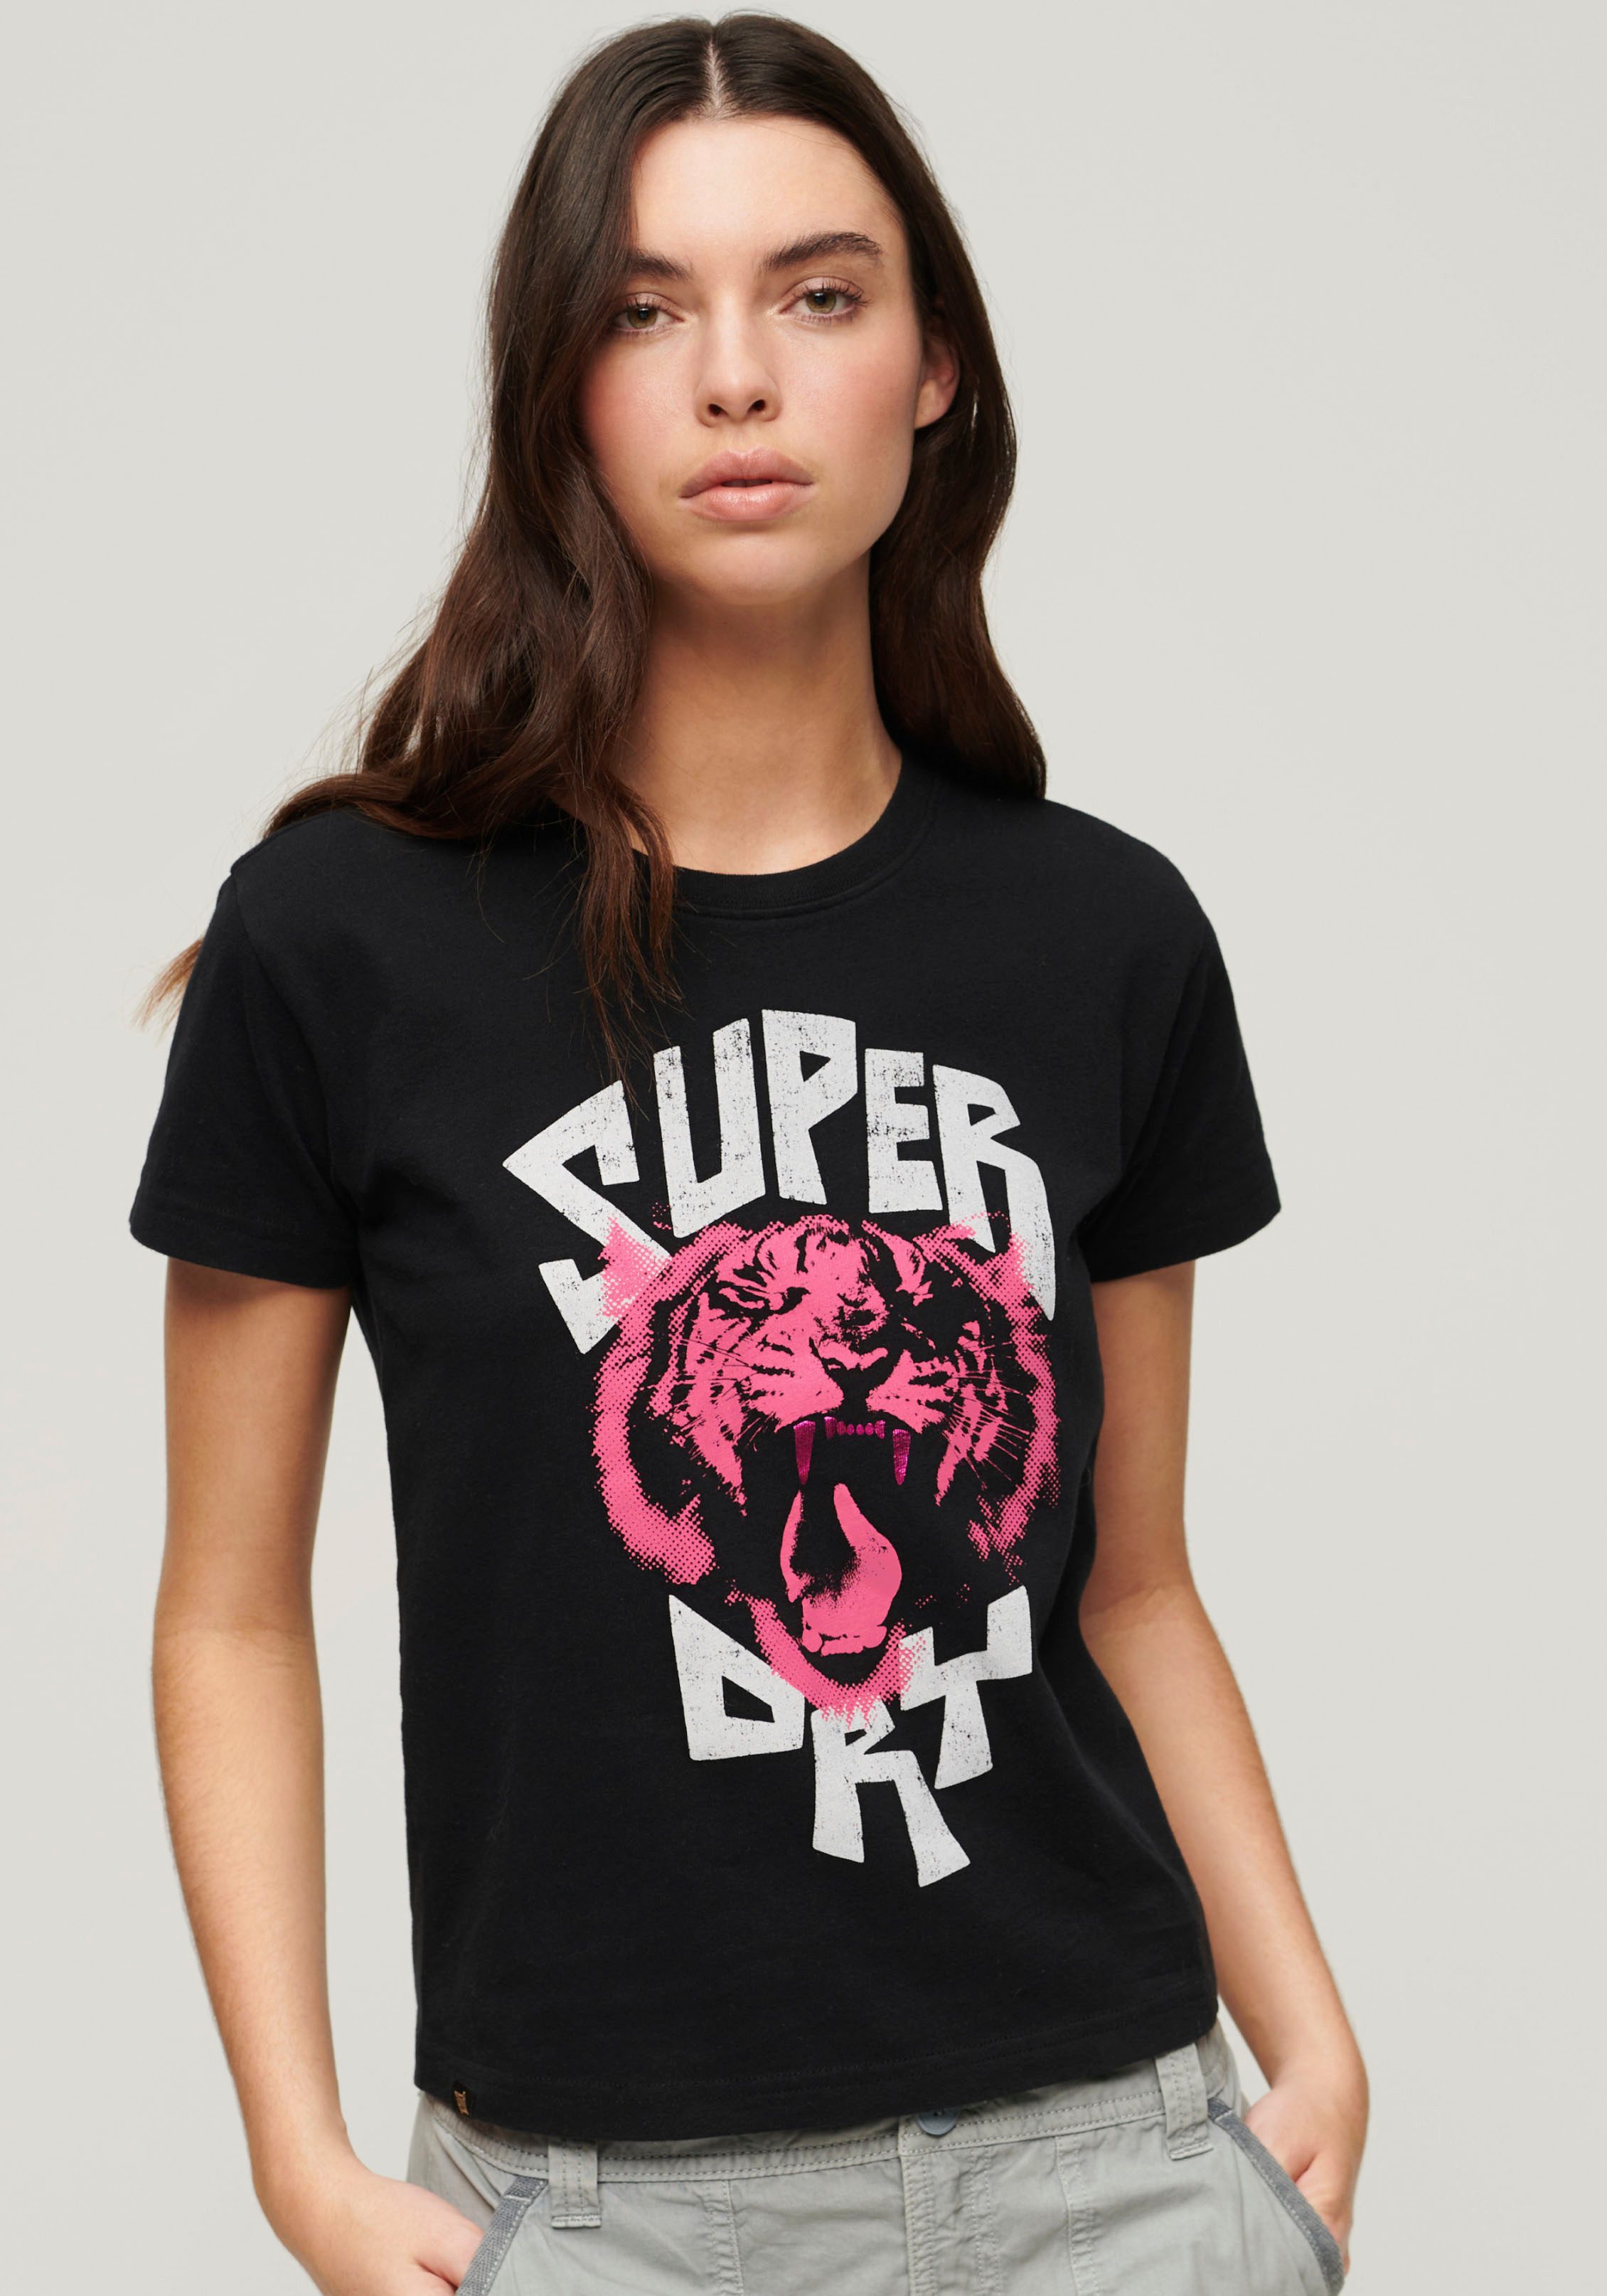 NU 20% KORTING: Superdry Shirt met korte mouwen